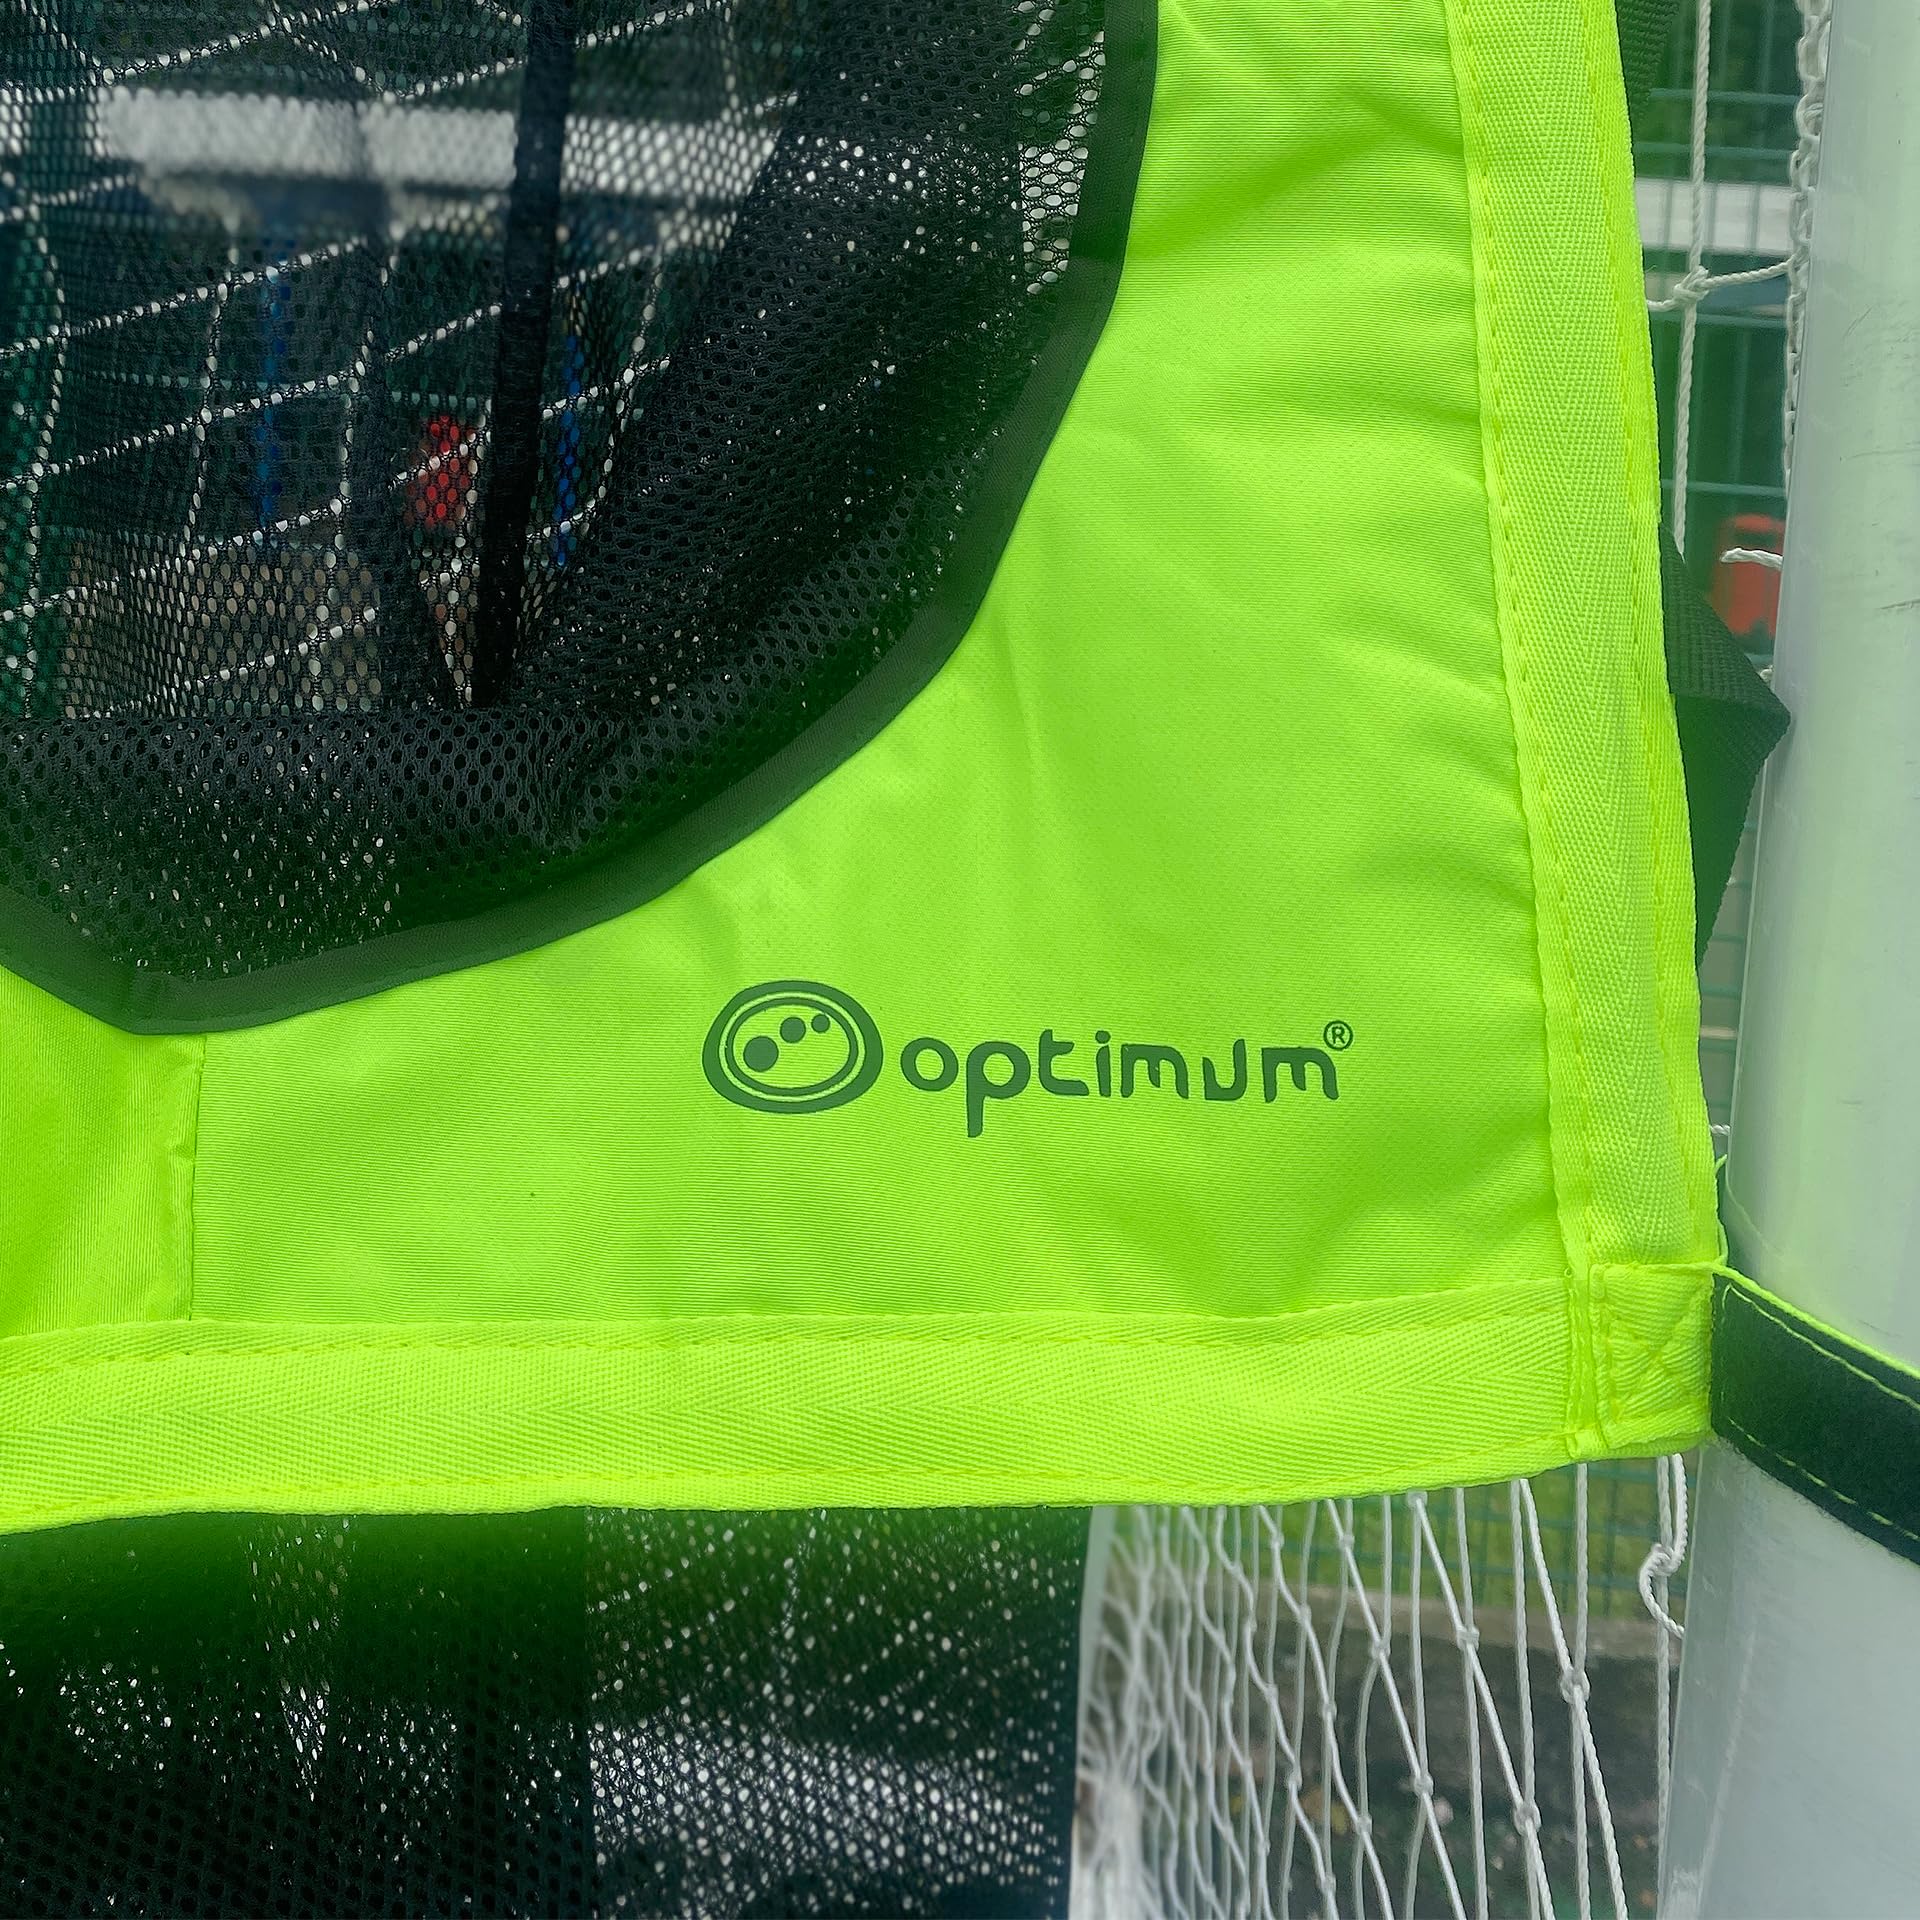 Optimum Football Soccer Target, Mesh Bag Carry Bag, Ball Carrier - Optimum